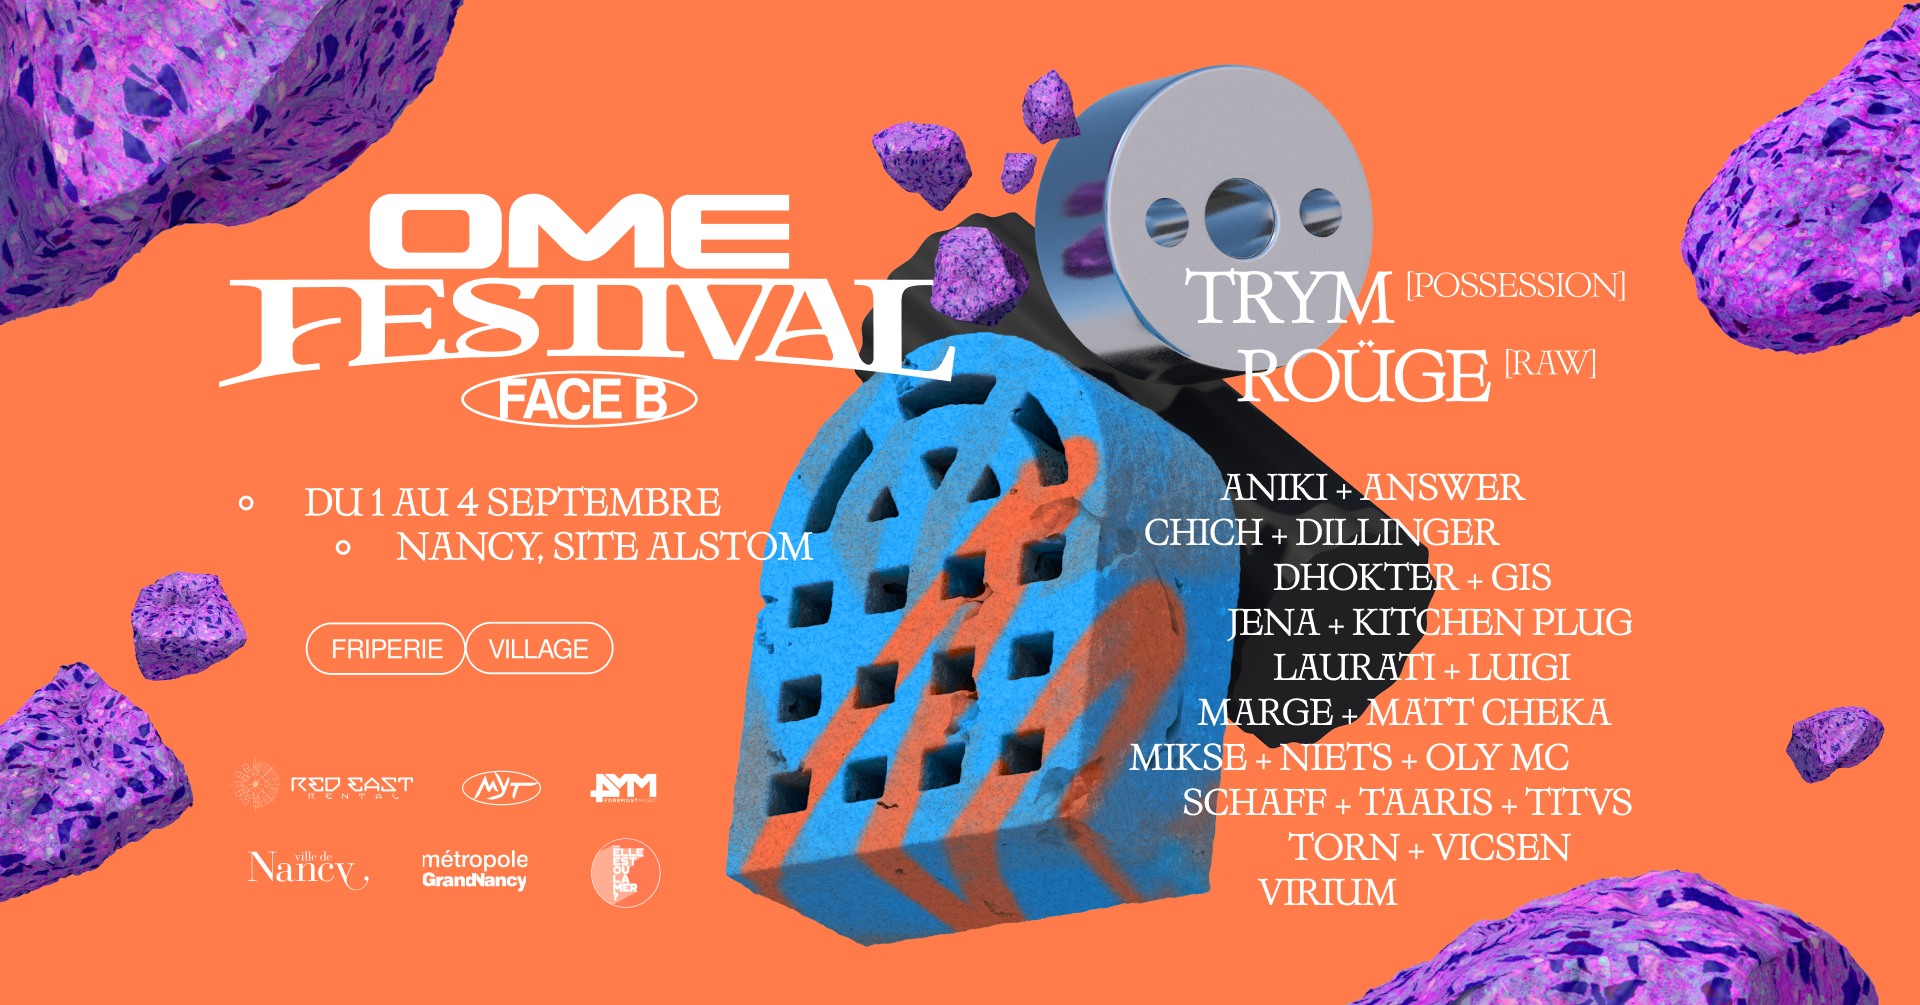 Affiche du OME Festival Face B 2022